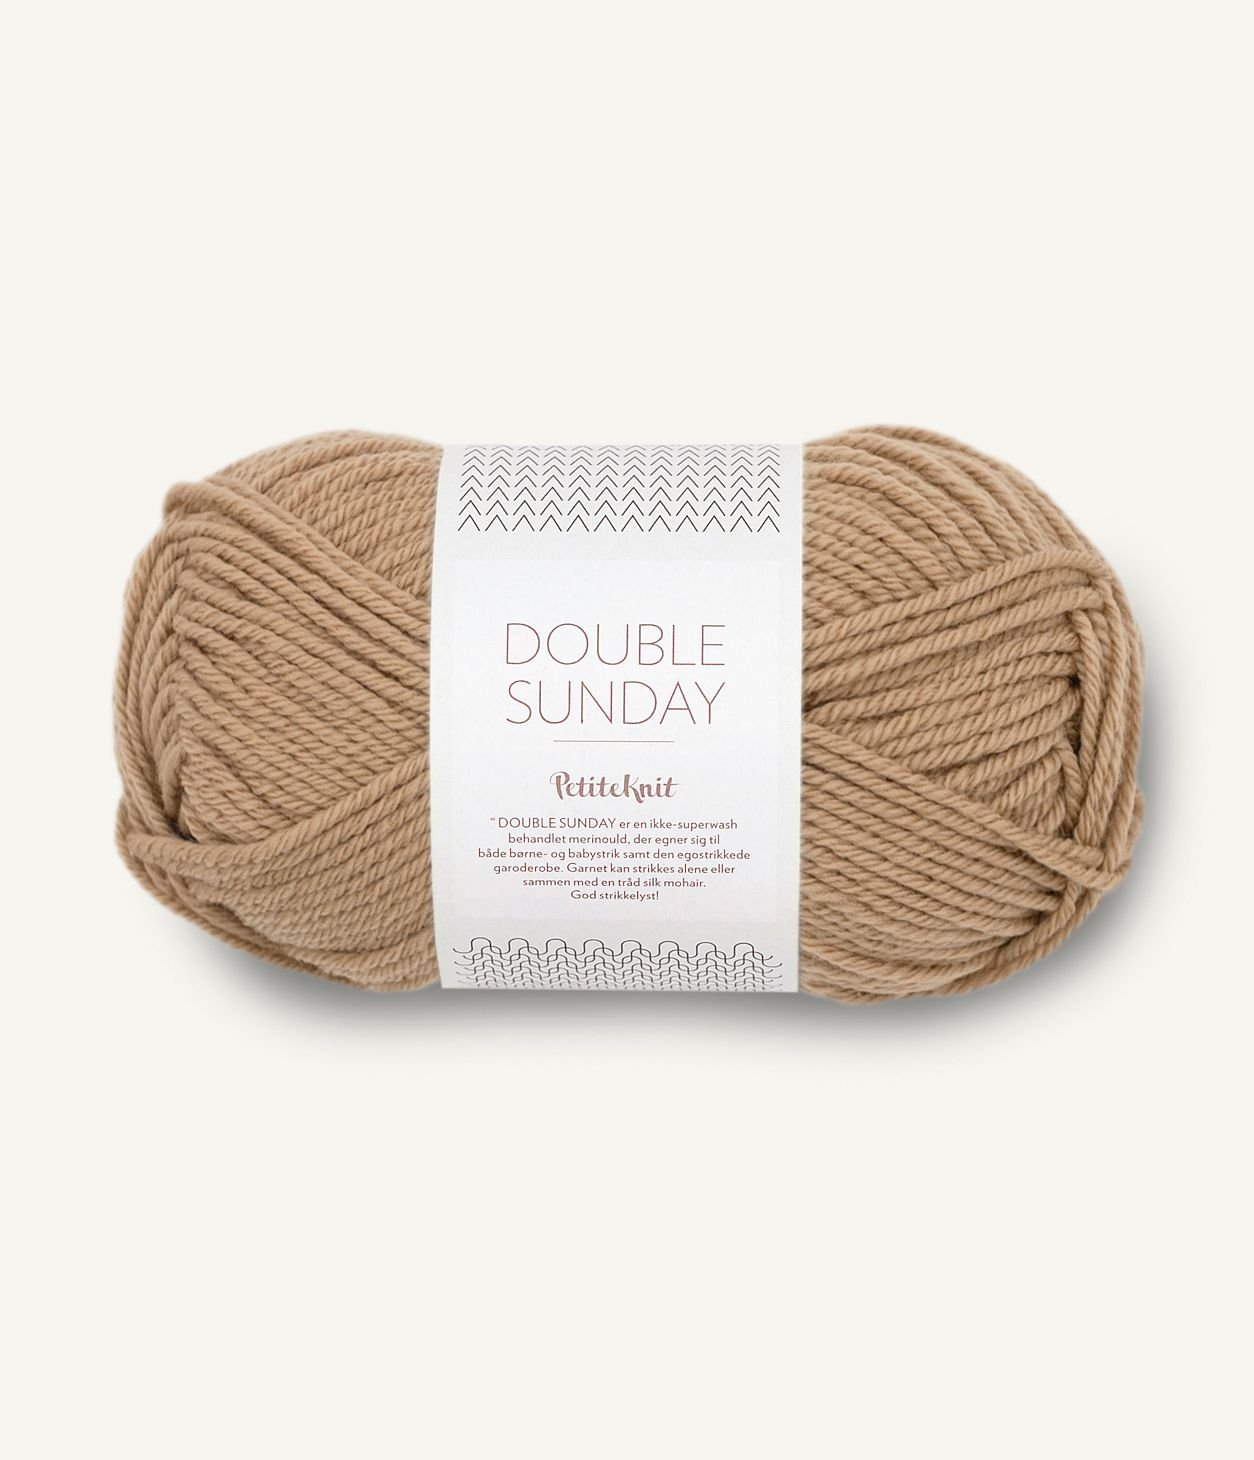 sandnes garn double Sunday by petiteknit yarn camel #2542